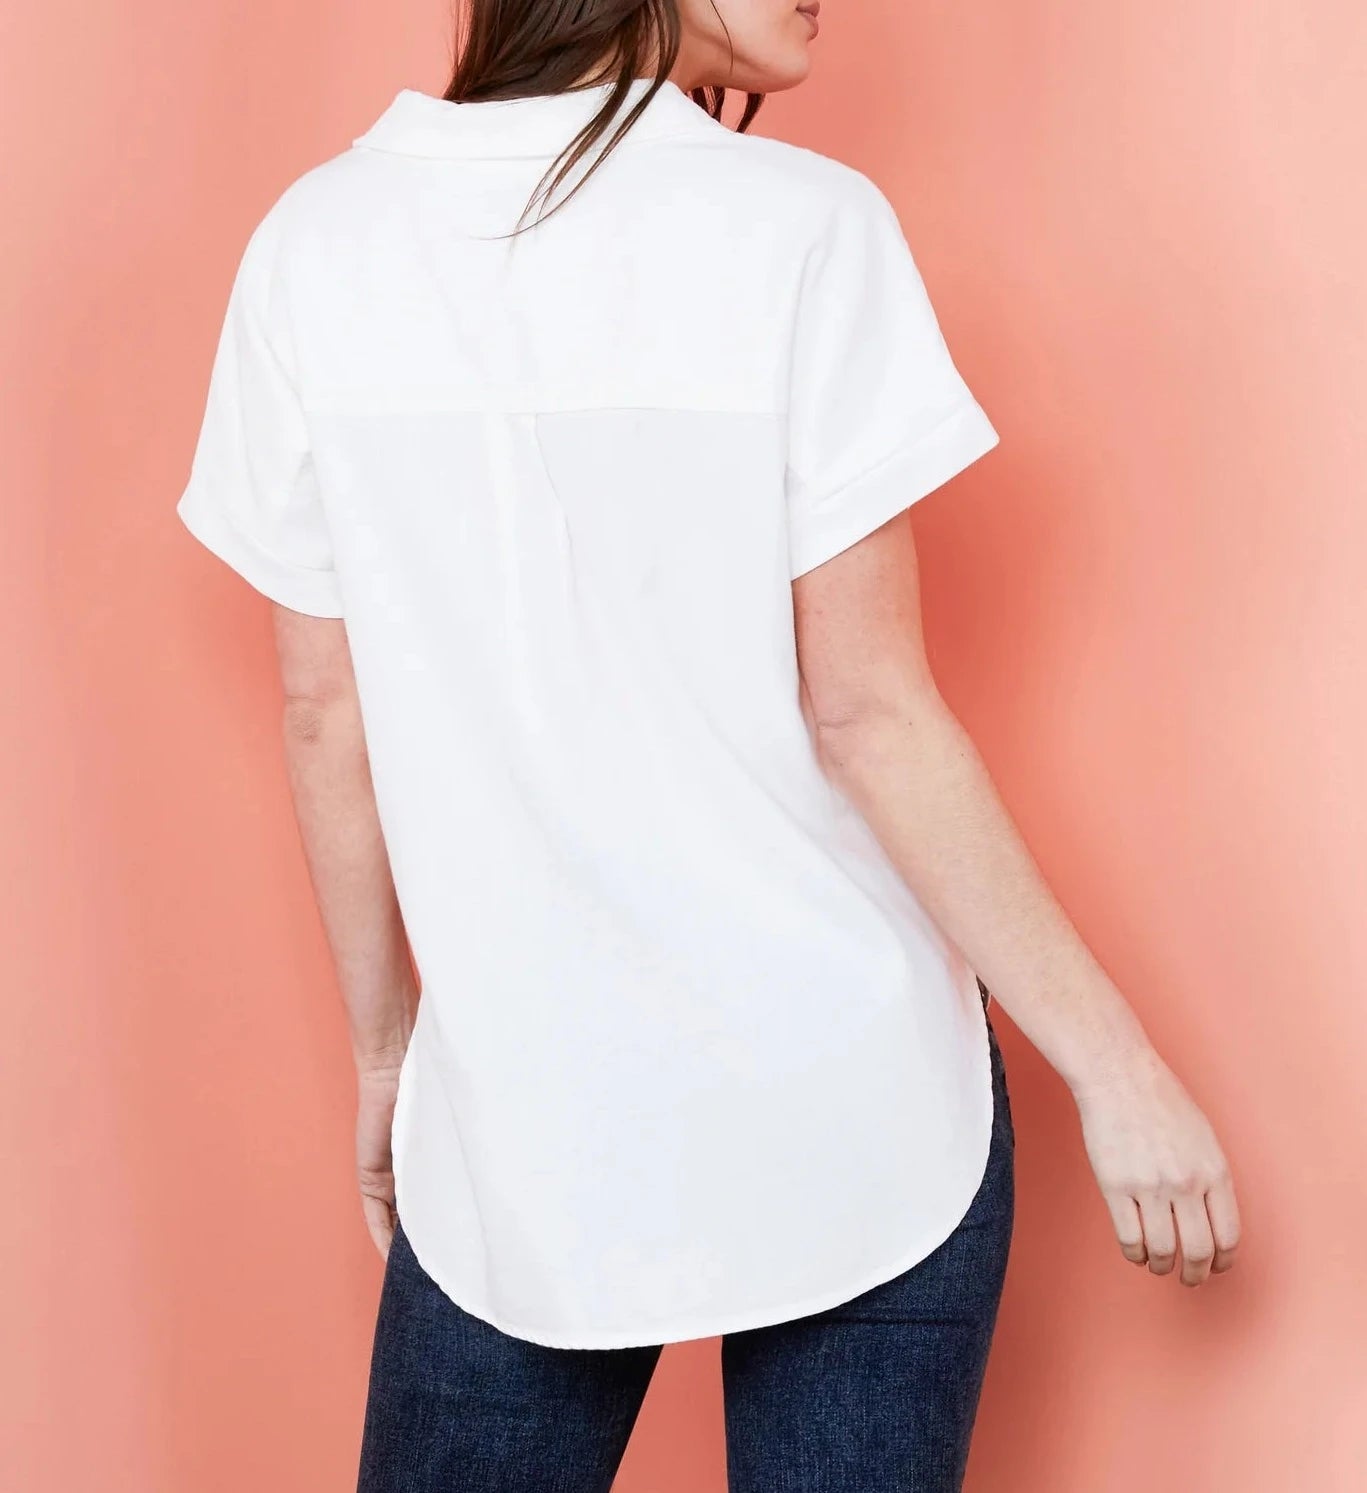 Simple White shirt